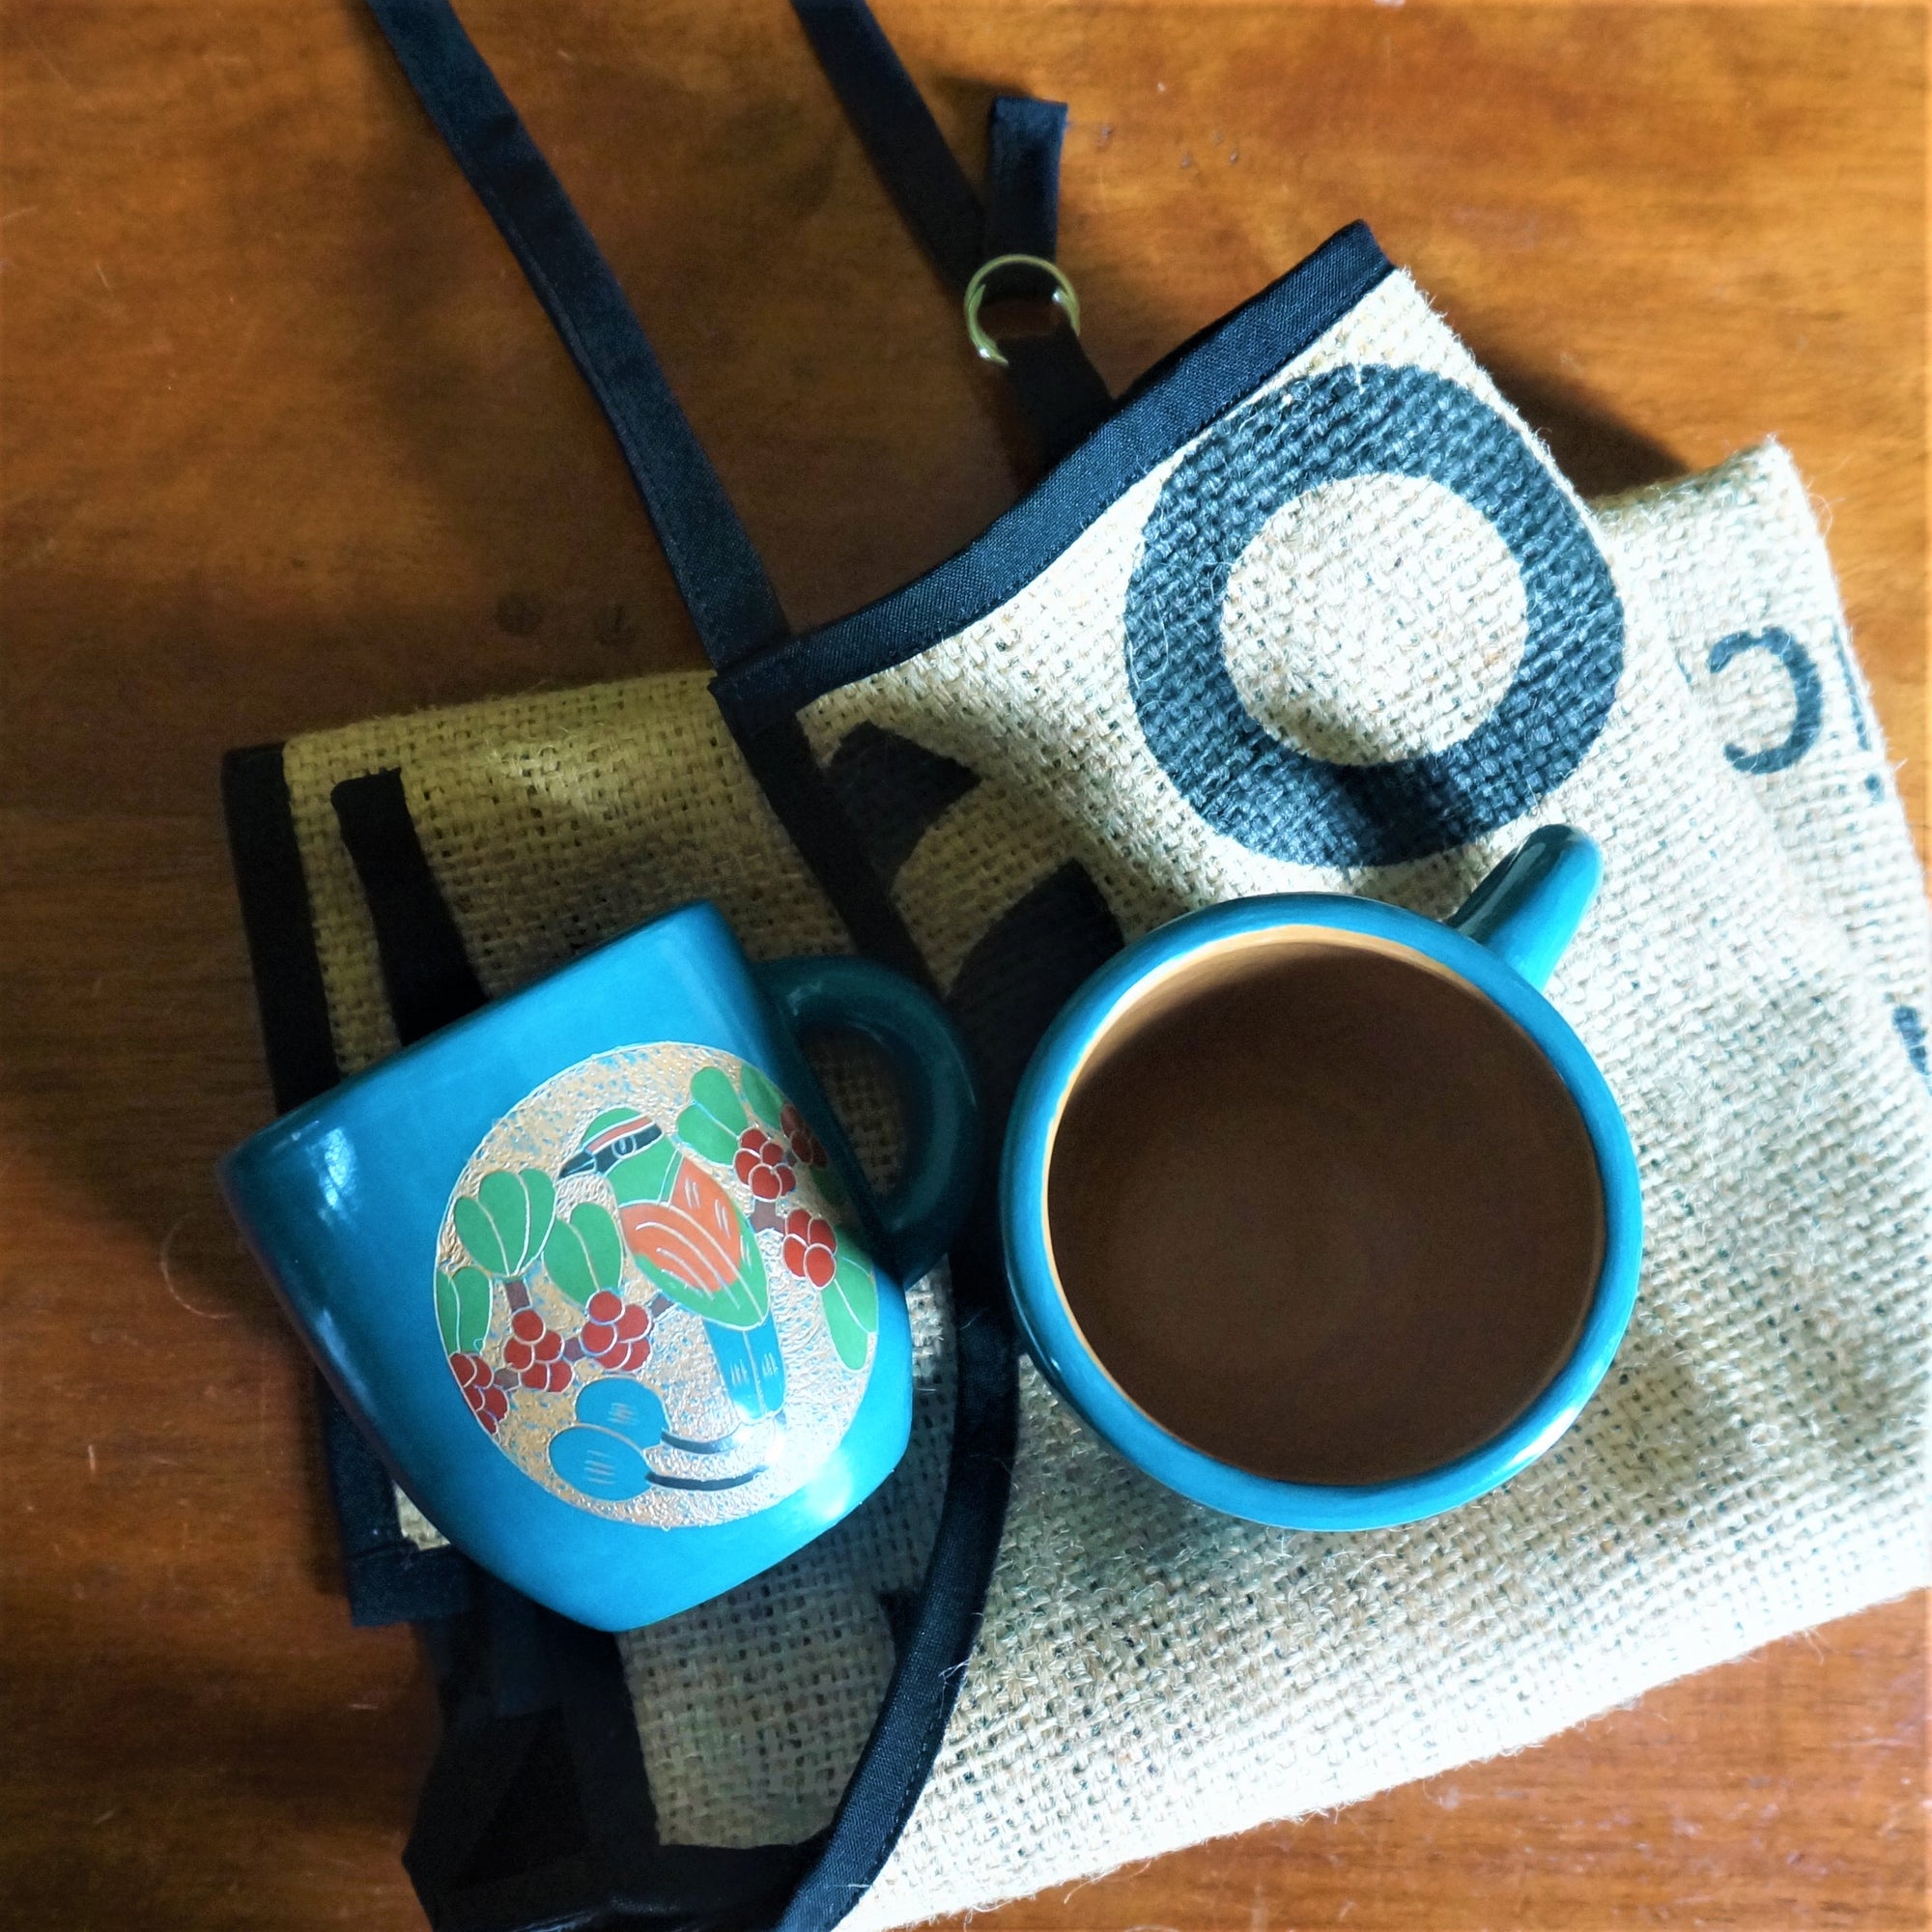 Handmade Ceramic Mug - Beto's Coffee Co